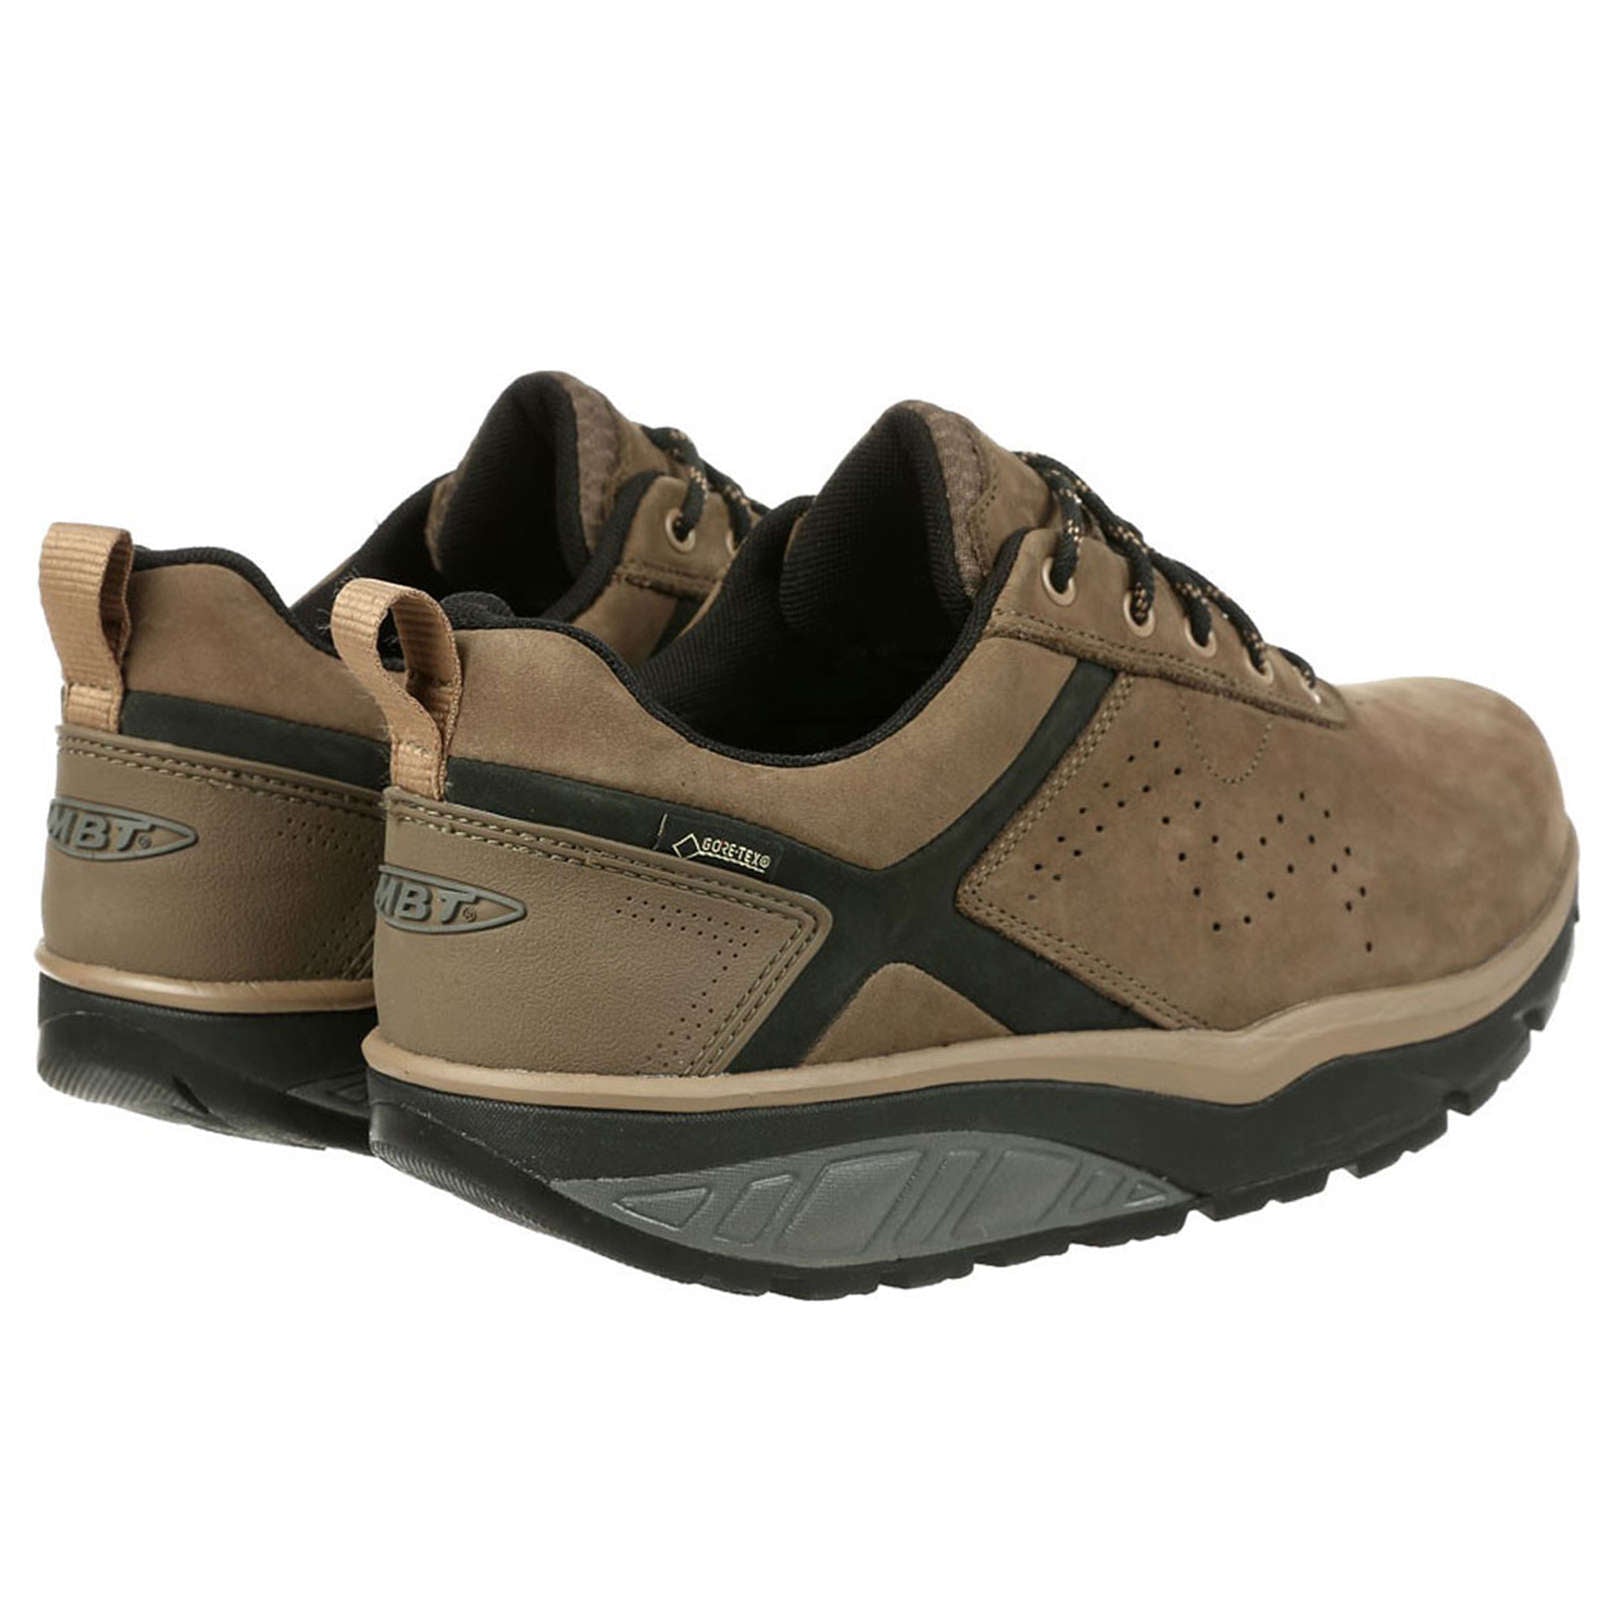 MBT Kibo GTX Waterproof Nubuck Leather Men's Hiking Shoes#color_brown